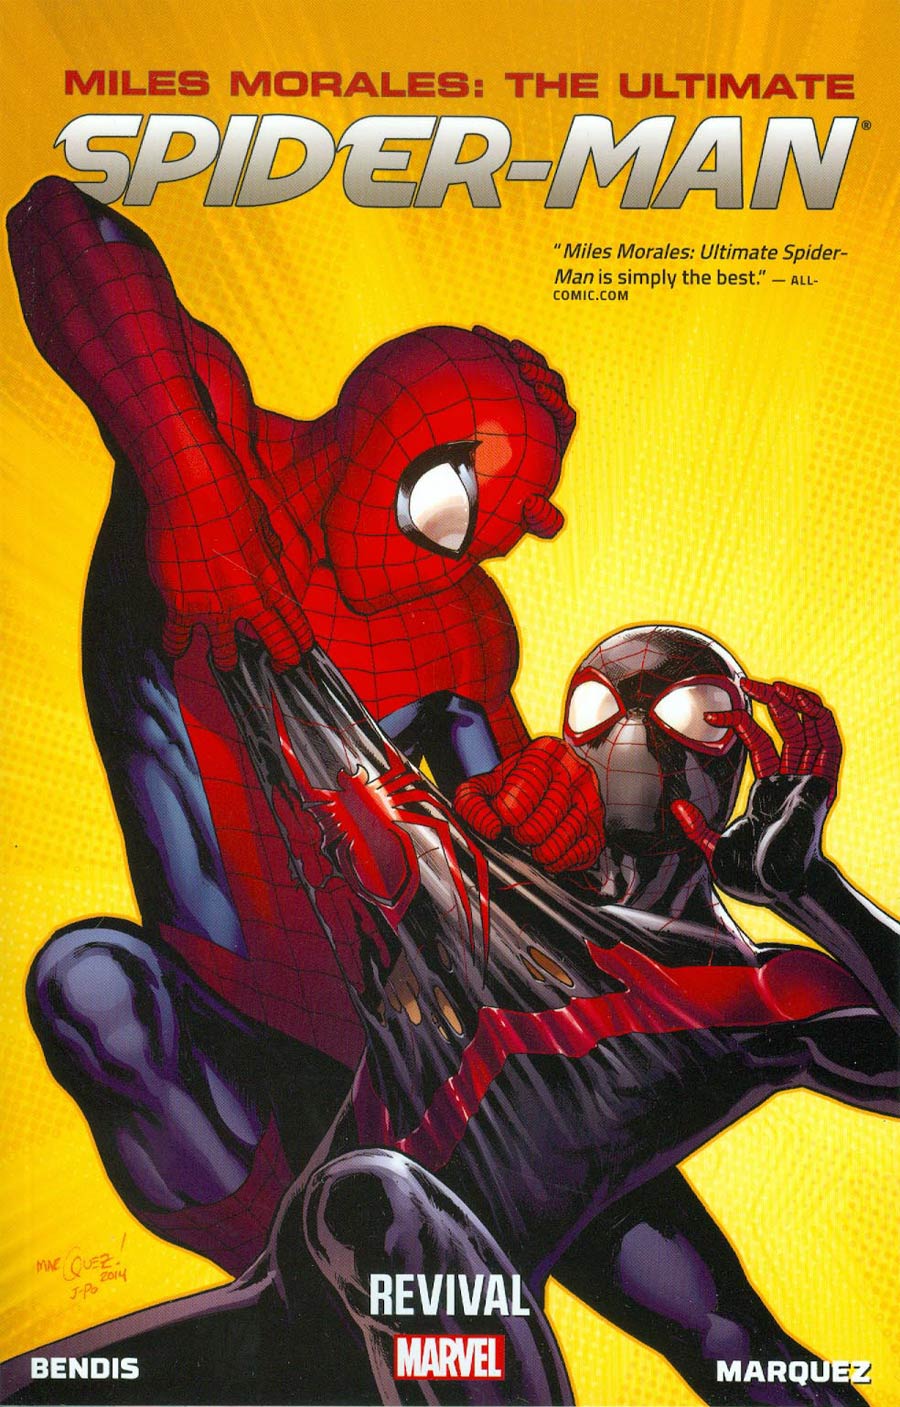 Miles Morales Ultimate Spider-Man Vol 1 Revival TP